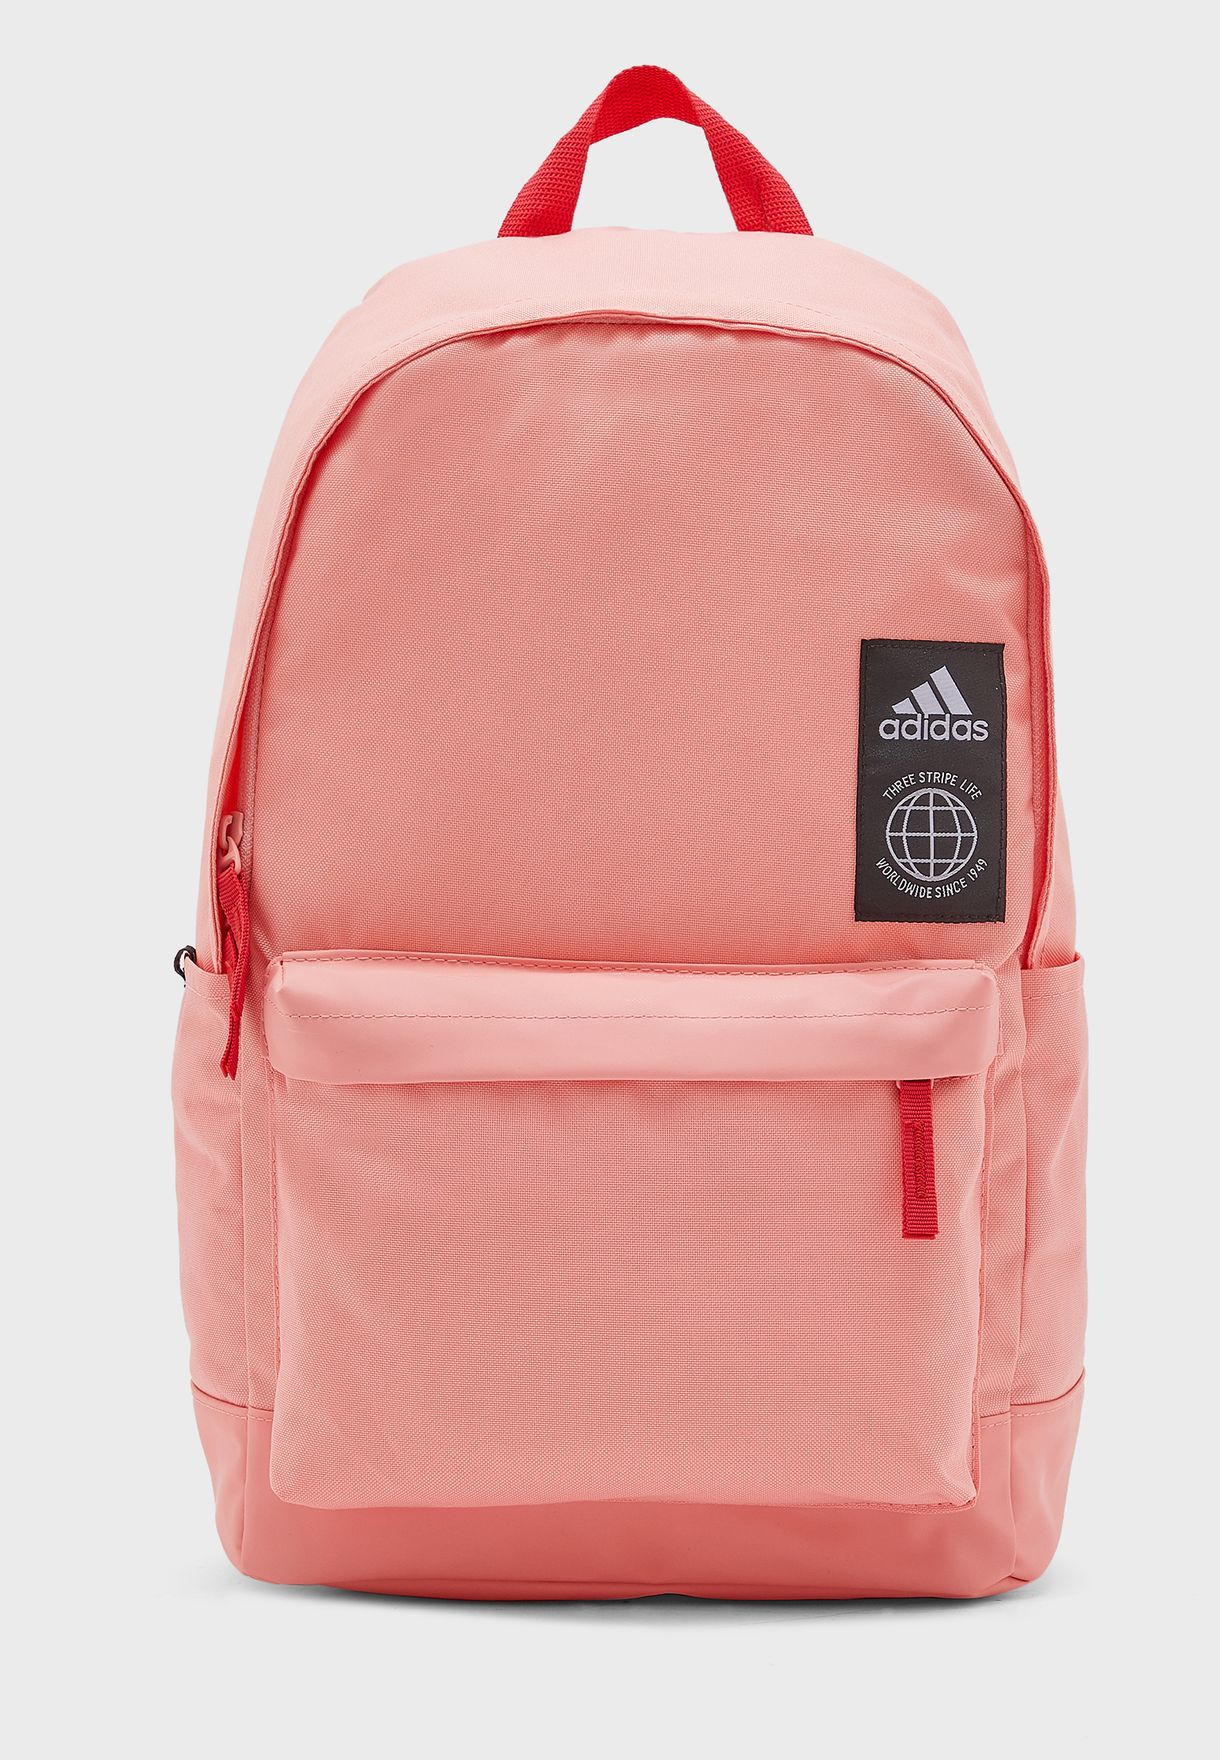 pink and grey adidas backpack